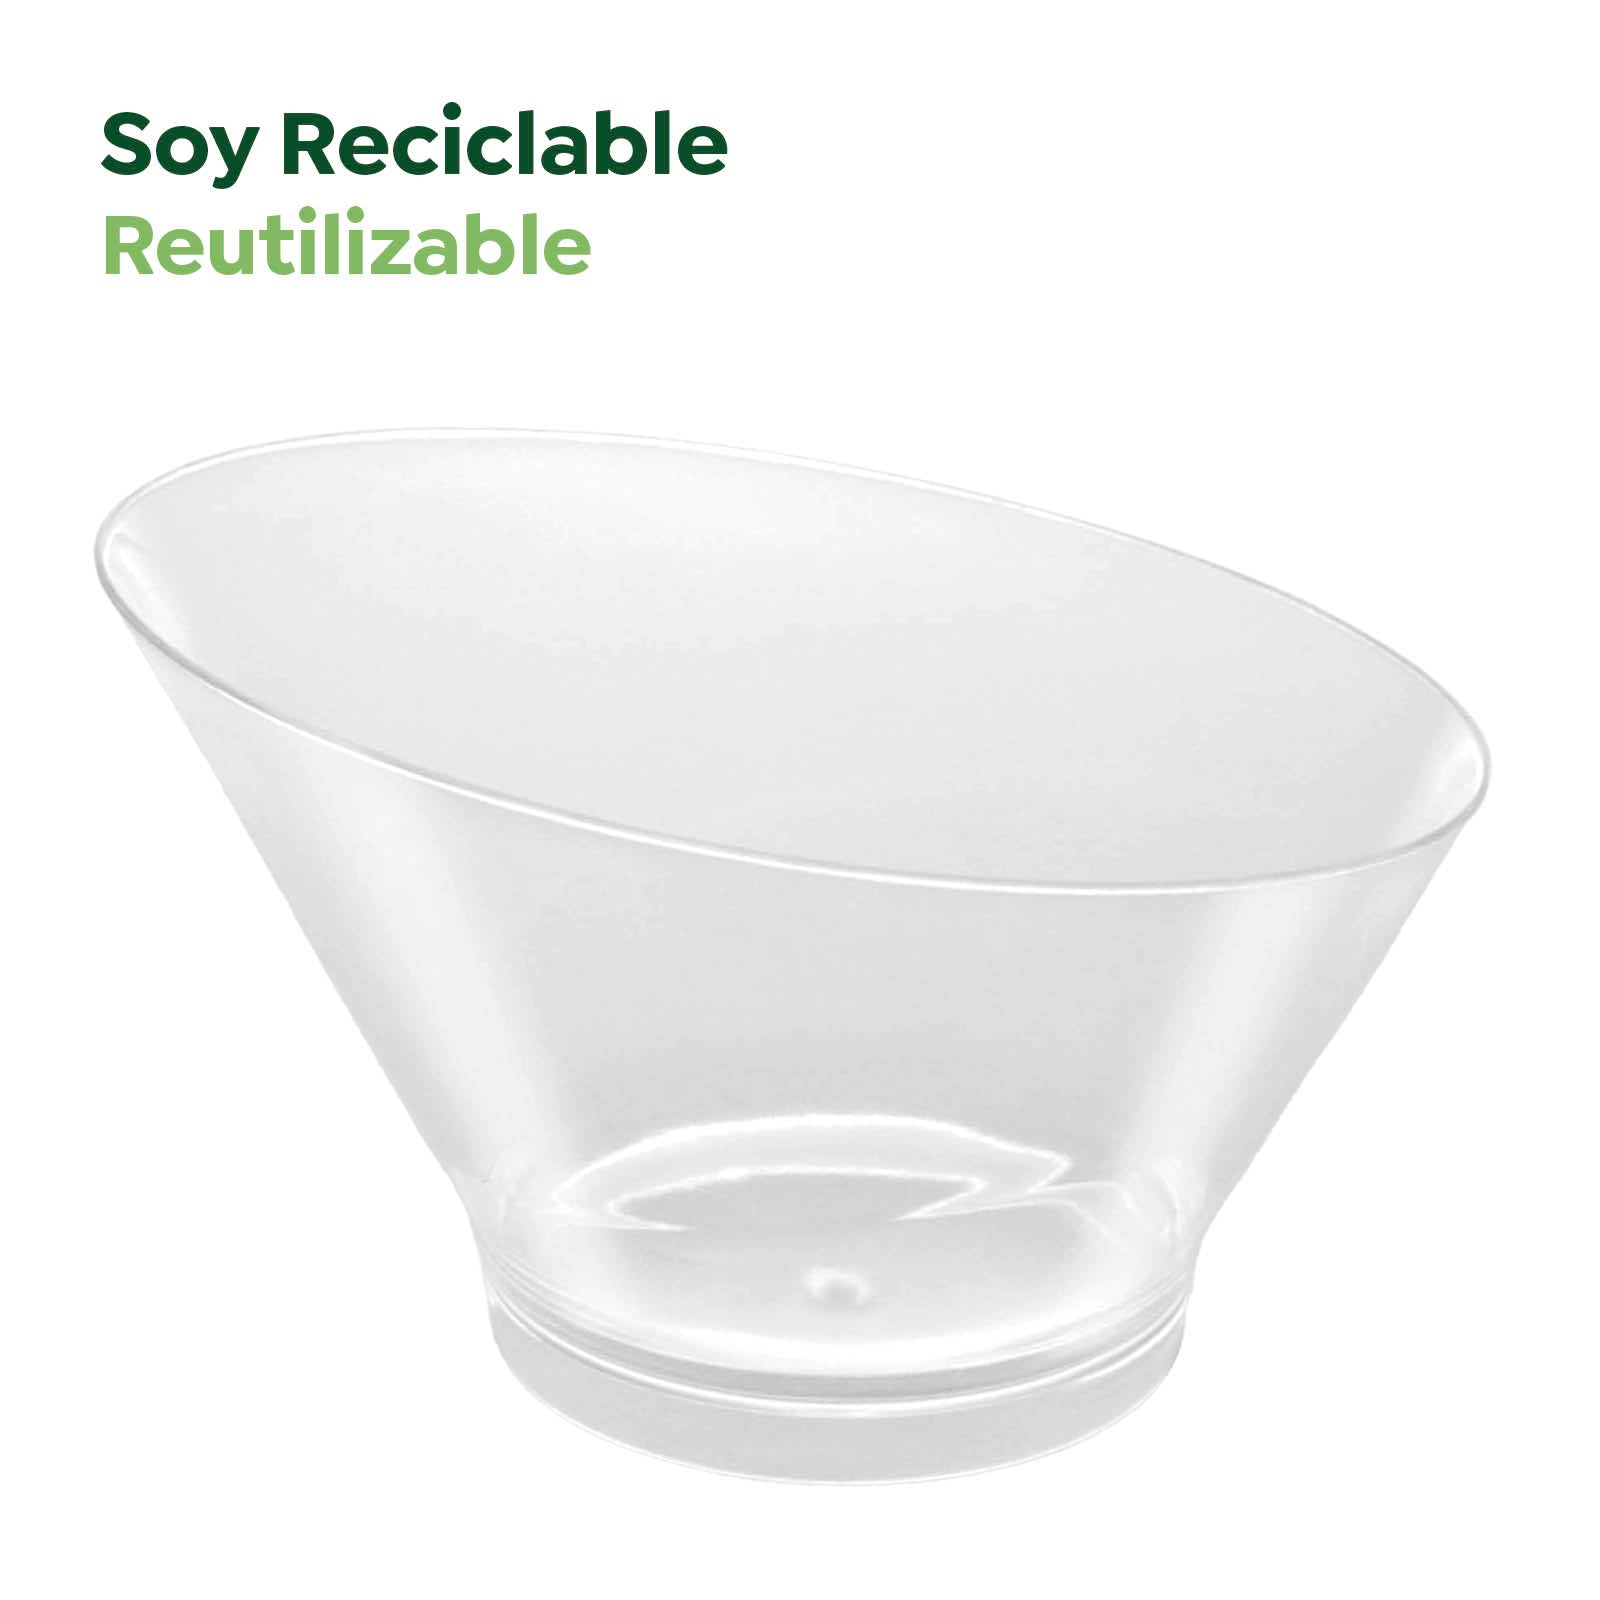 Bol Plástico Reciclable Redondo Grande Asimétrico Finger Food 250 cc Transparente